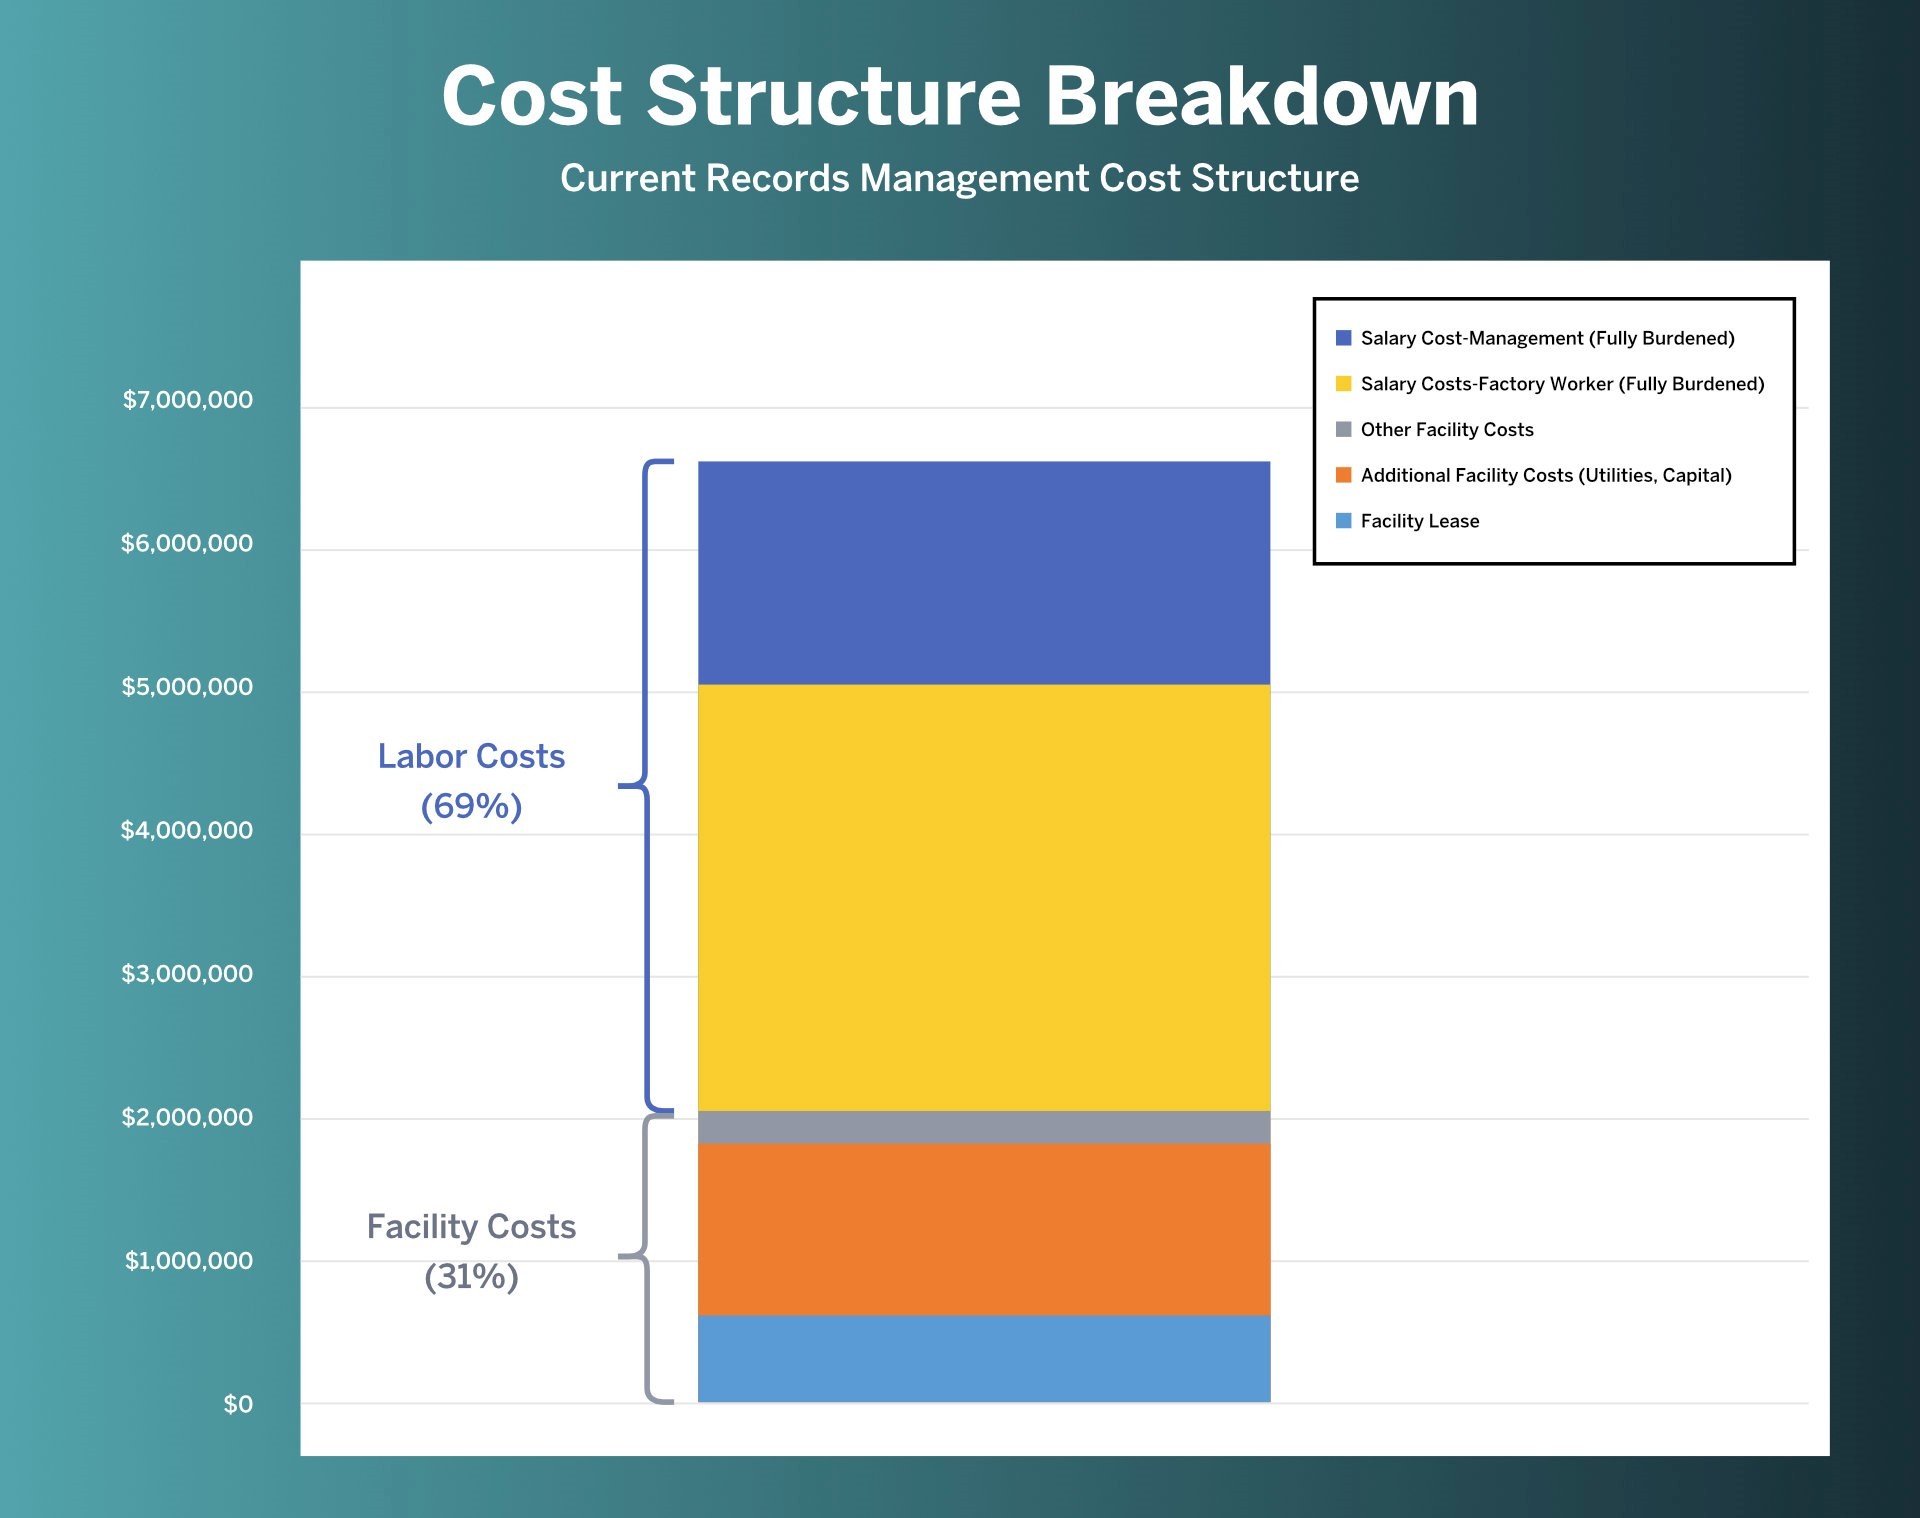 Cost structure breakdown